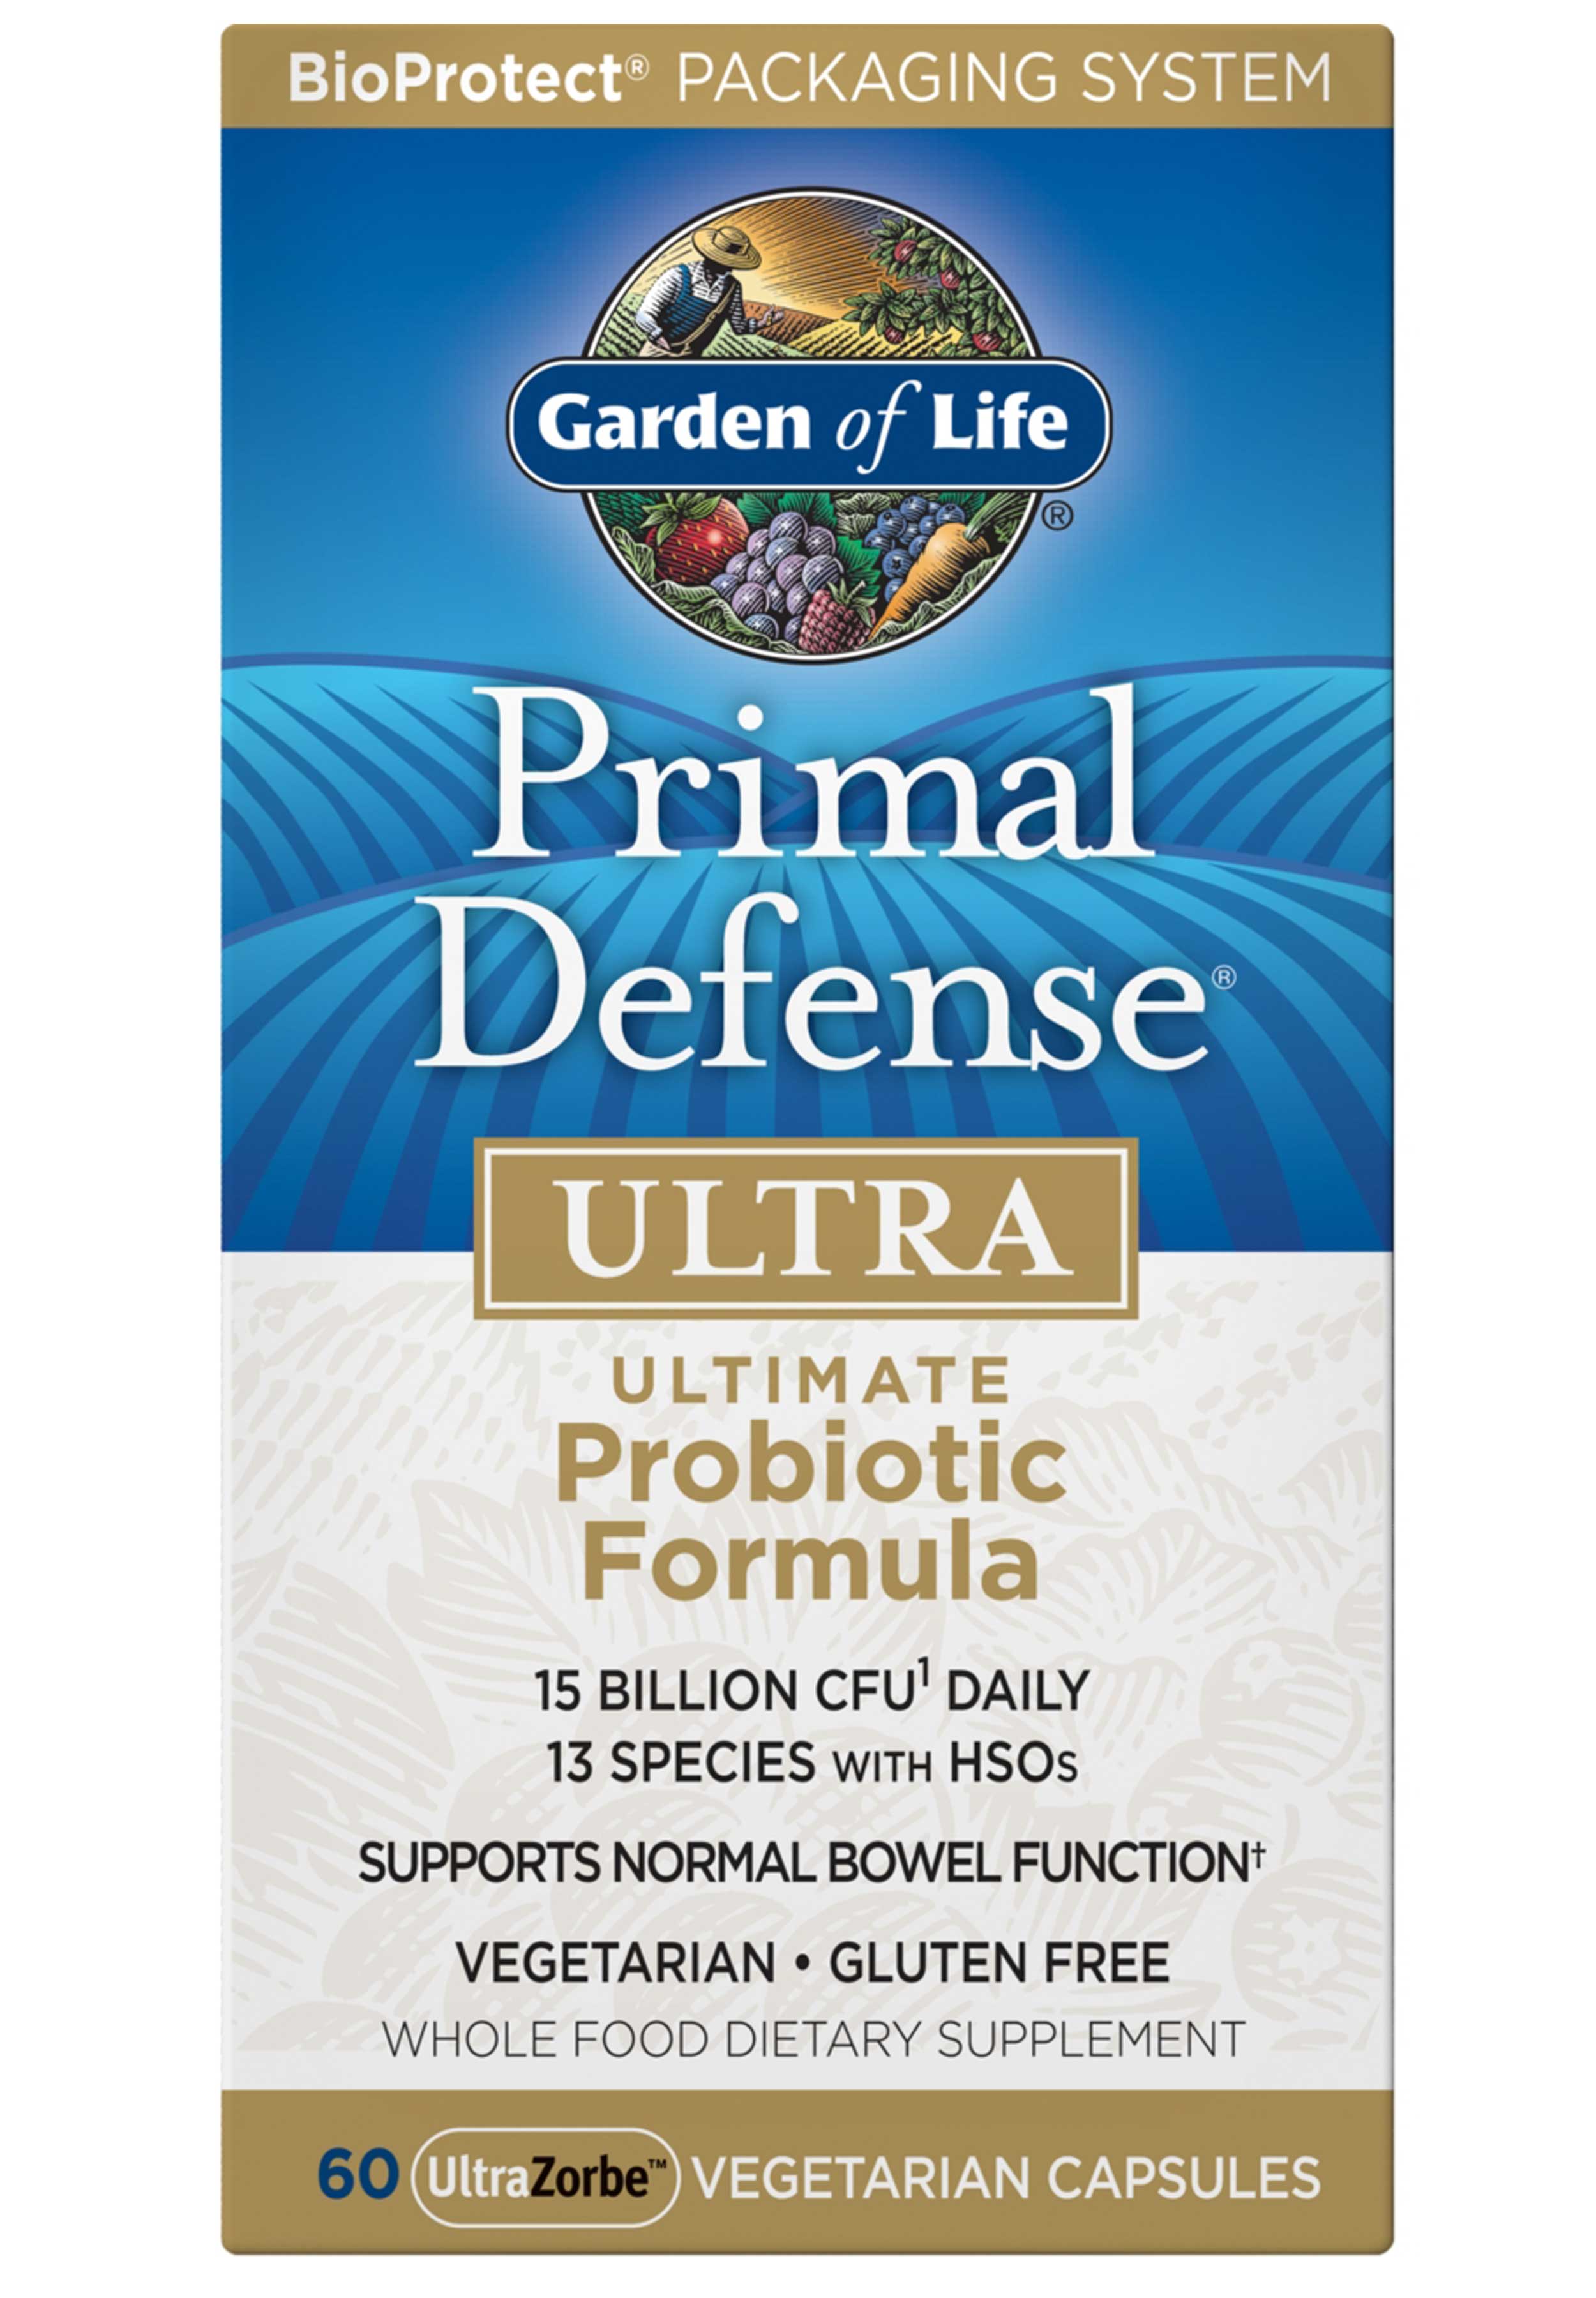 Garden of Life Primal Defense ULTRA